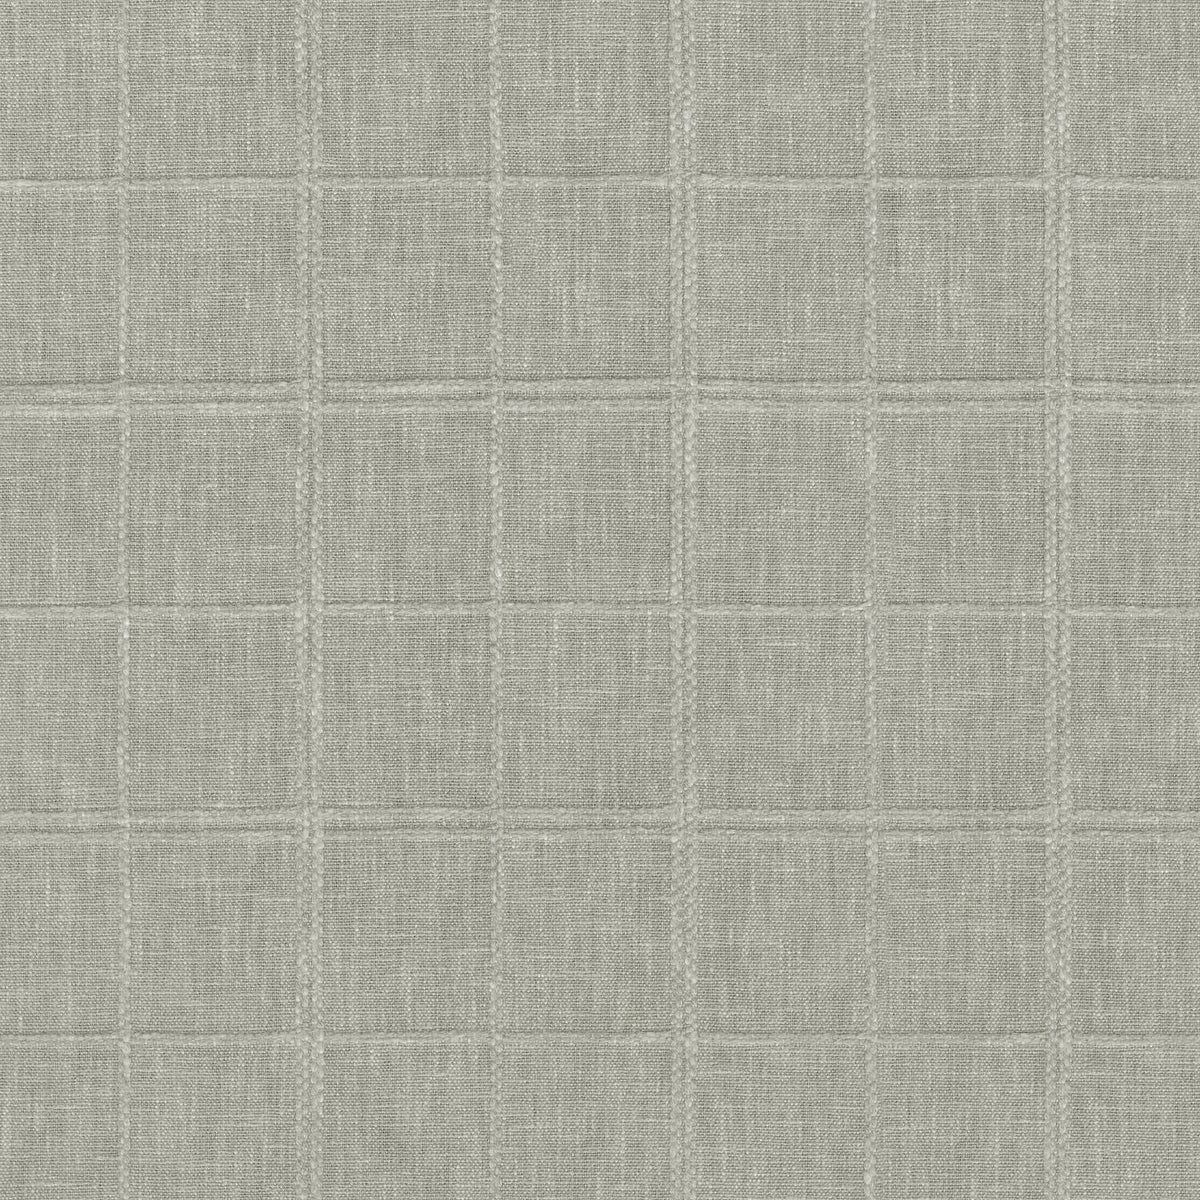 P/K Lifestyles Moray - Shale 410650 Upholstery Fabric